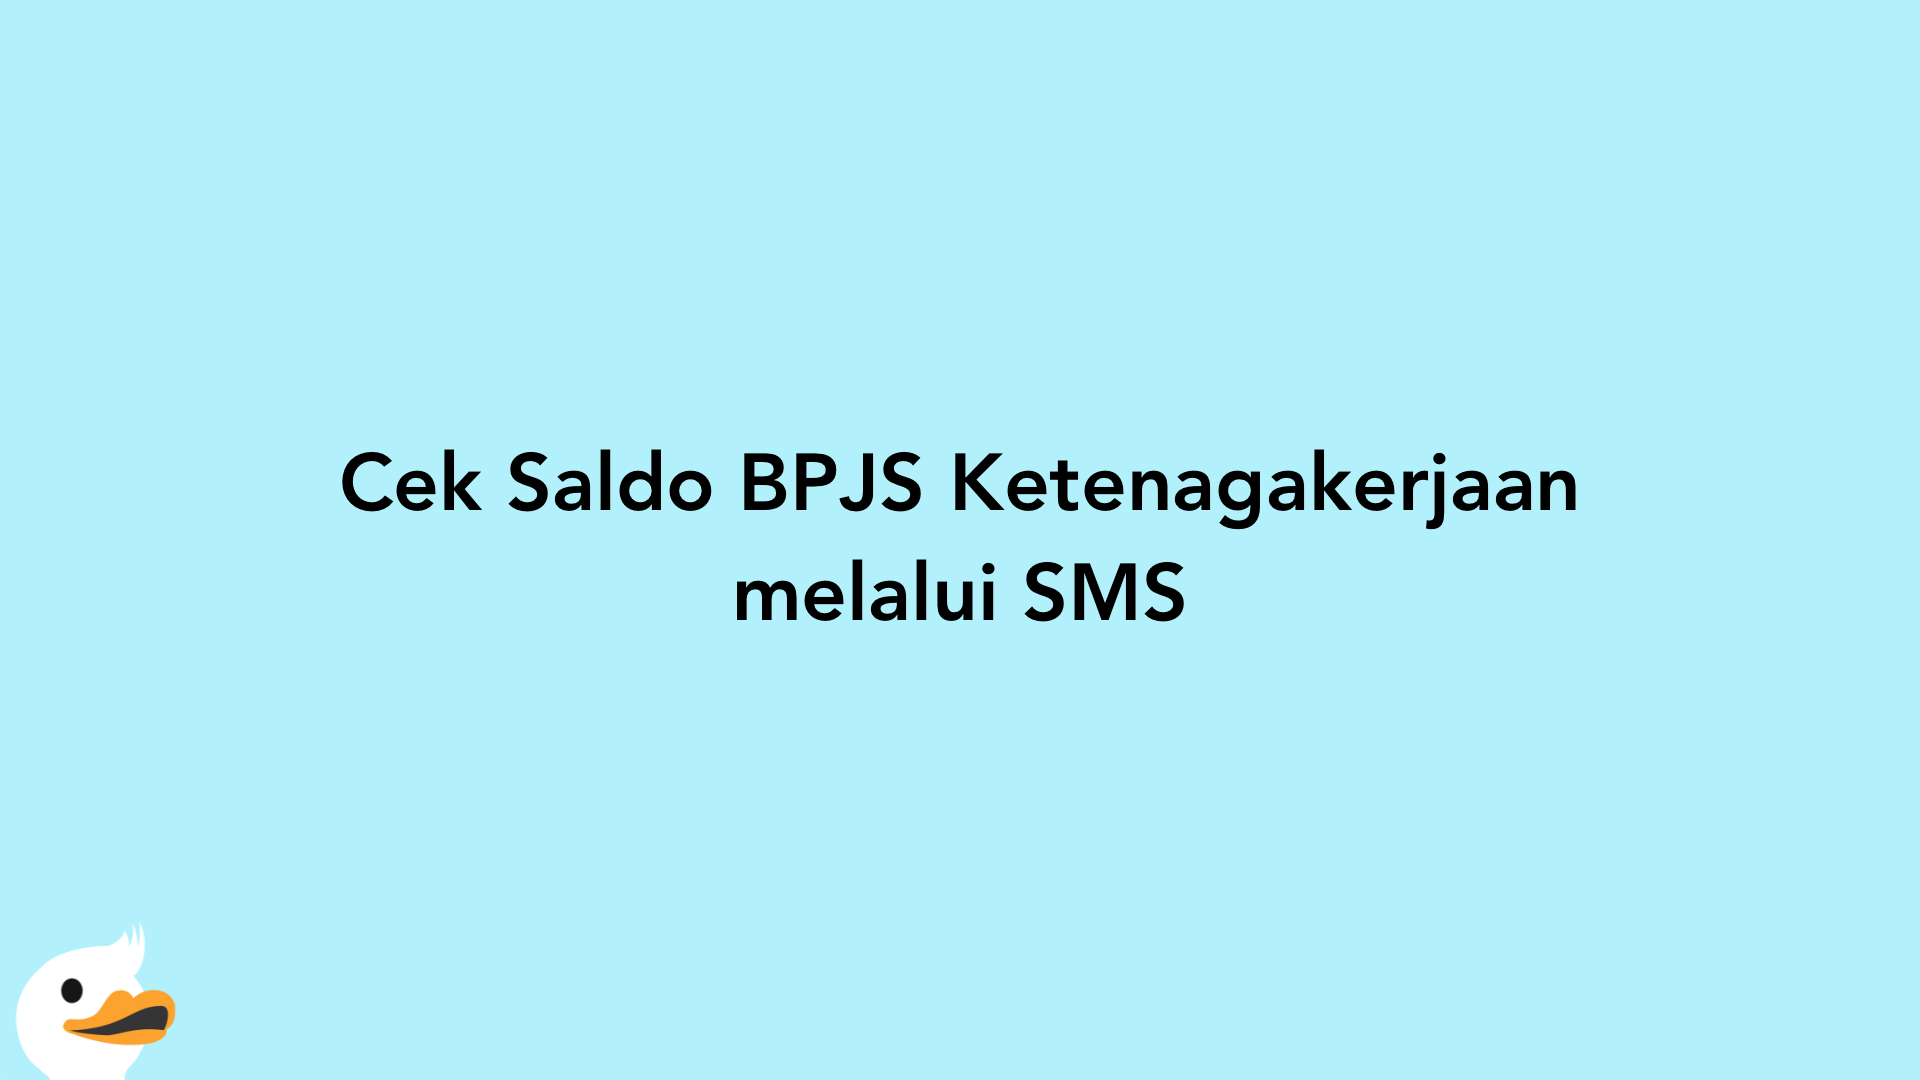 Cek Saldo BPJS Ketenagakerjaan melalui SMS